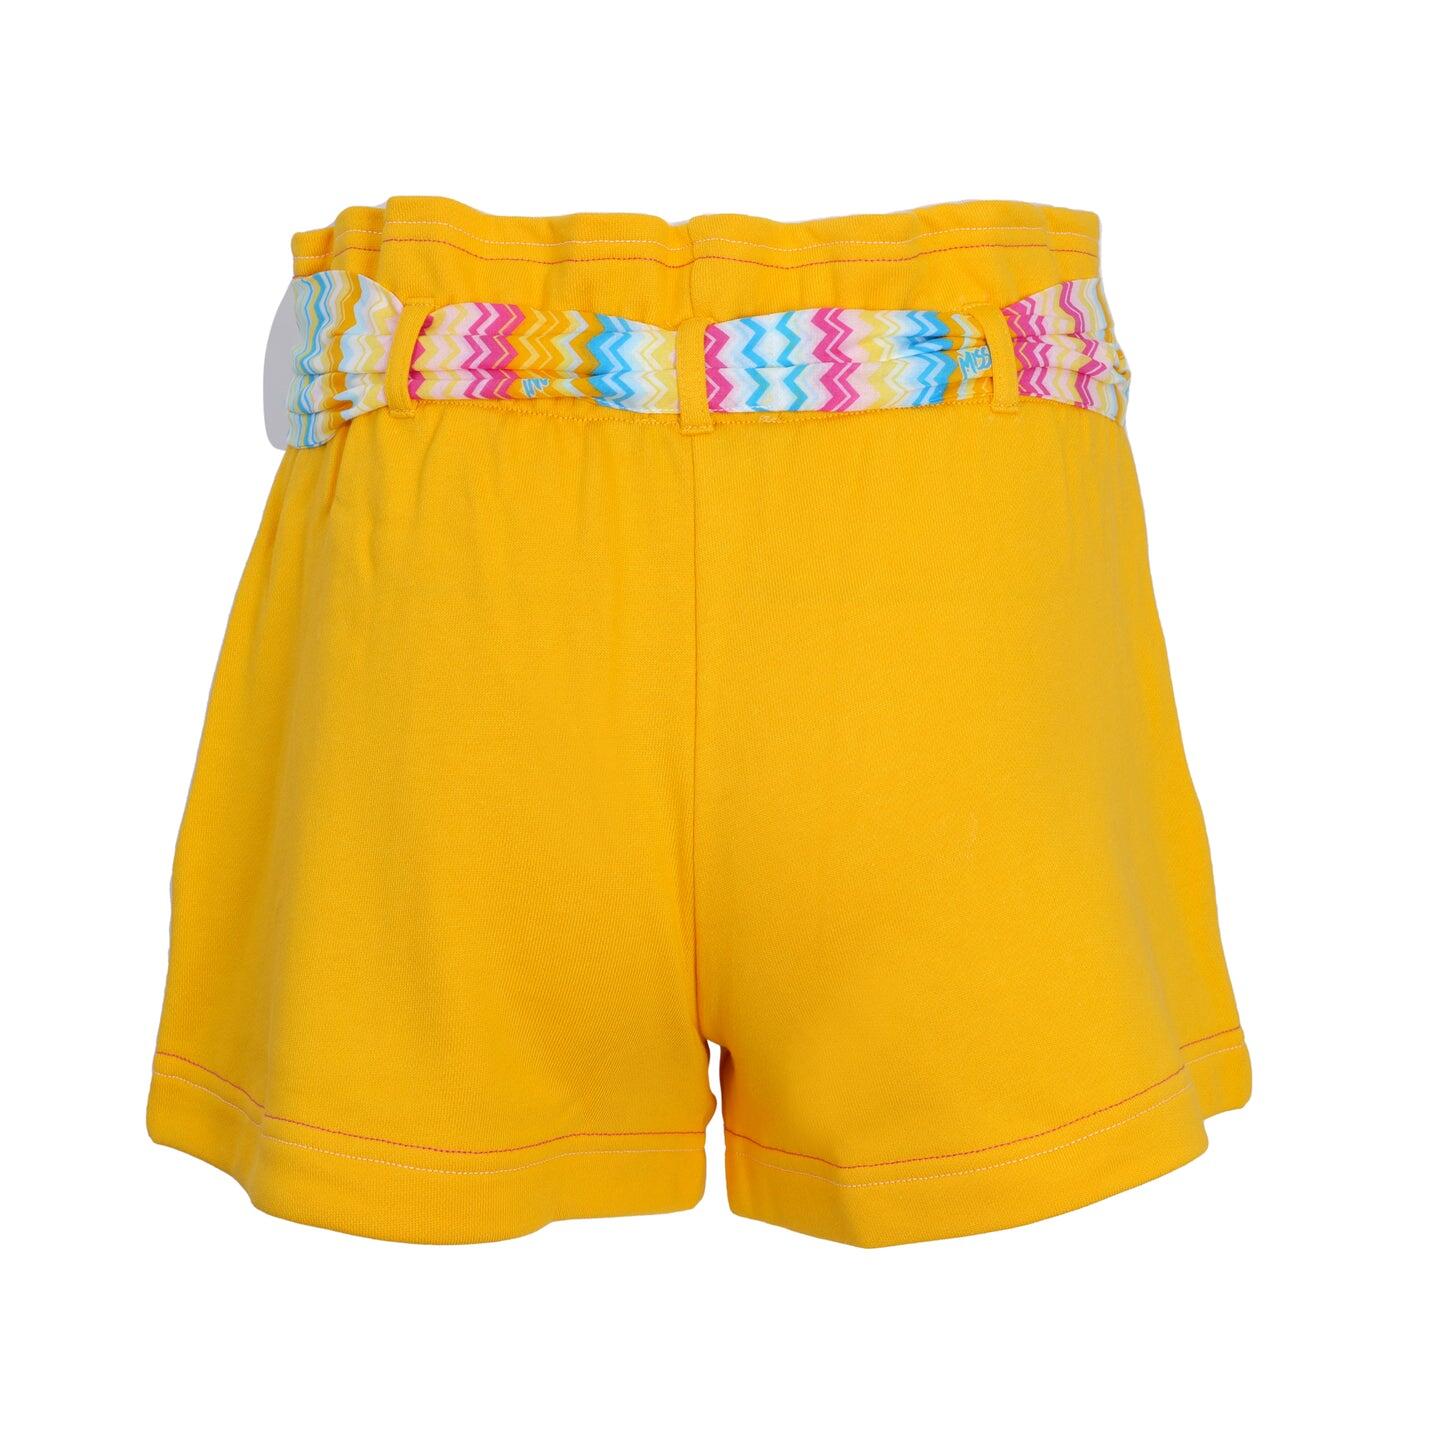 Orange Shorts With Zigzag Printed Belt For Girls